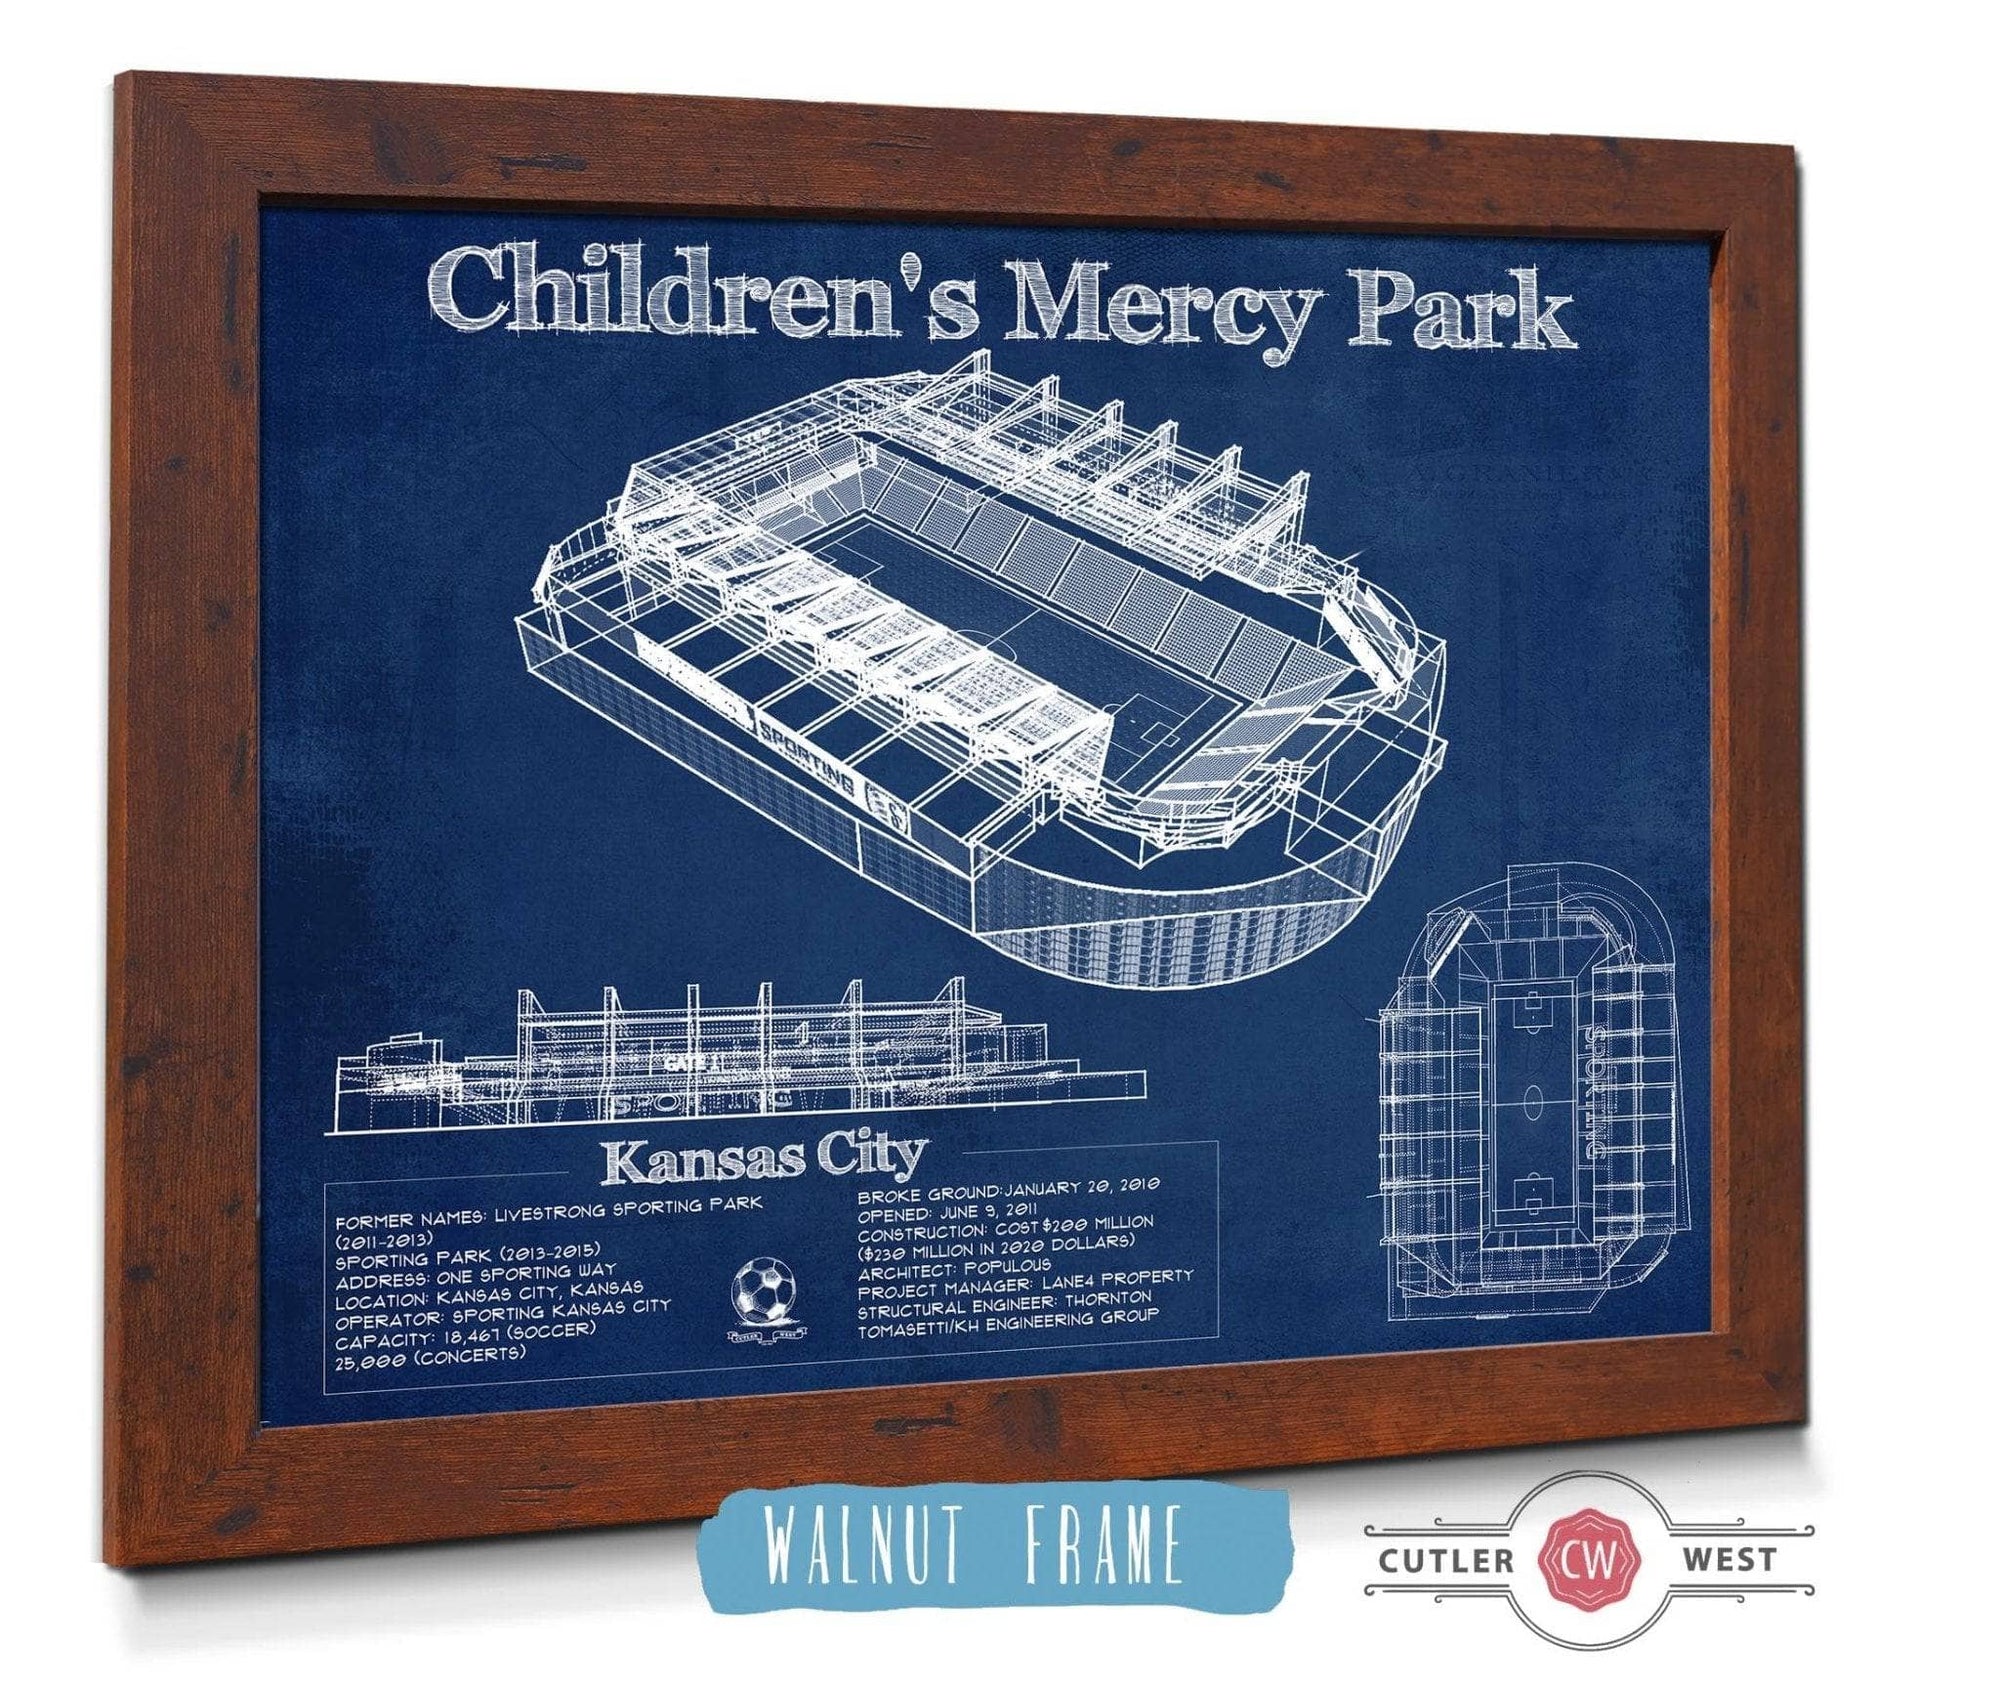 Cutler West 14" x 11" / Walnut Frame Kansas City Children's Mercy Park Vintage Soccer MLS Print 933311116_53690